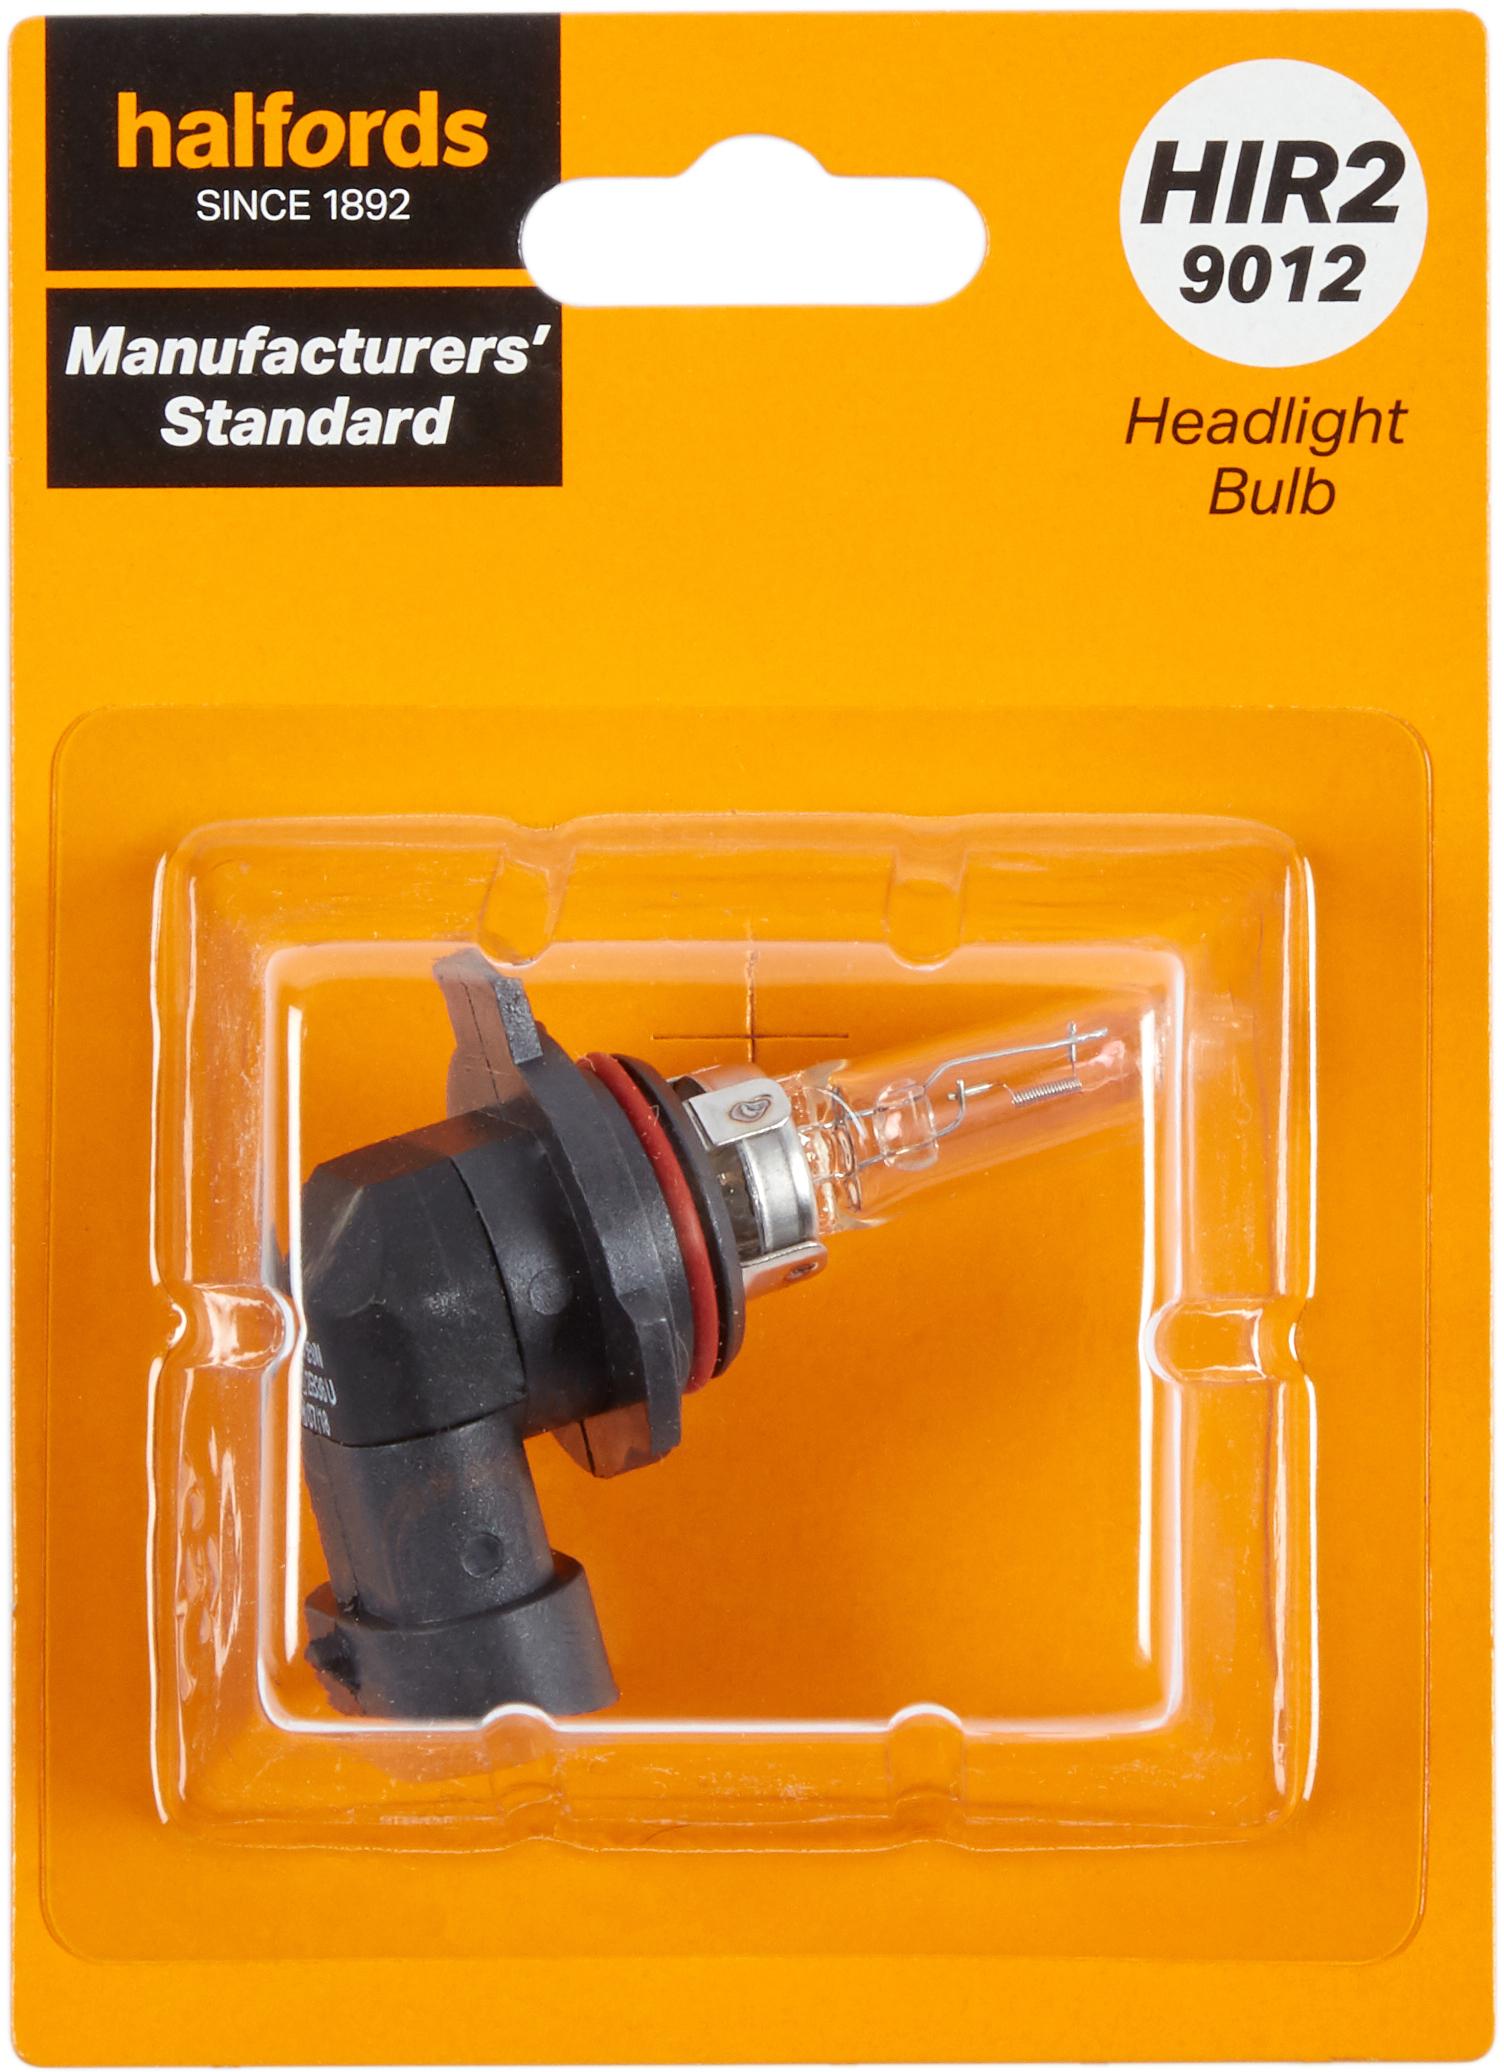 Hir2 9012 Car Headlight Bulb Manufacturers Standard Halfords Single Pack